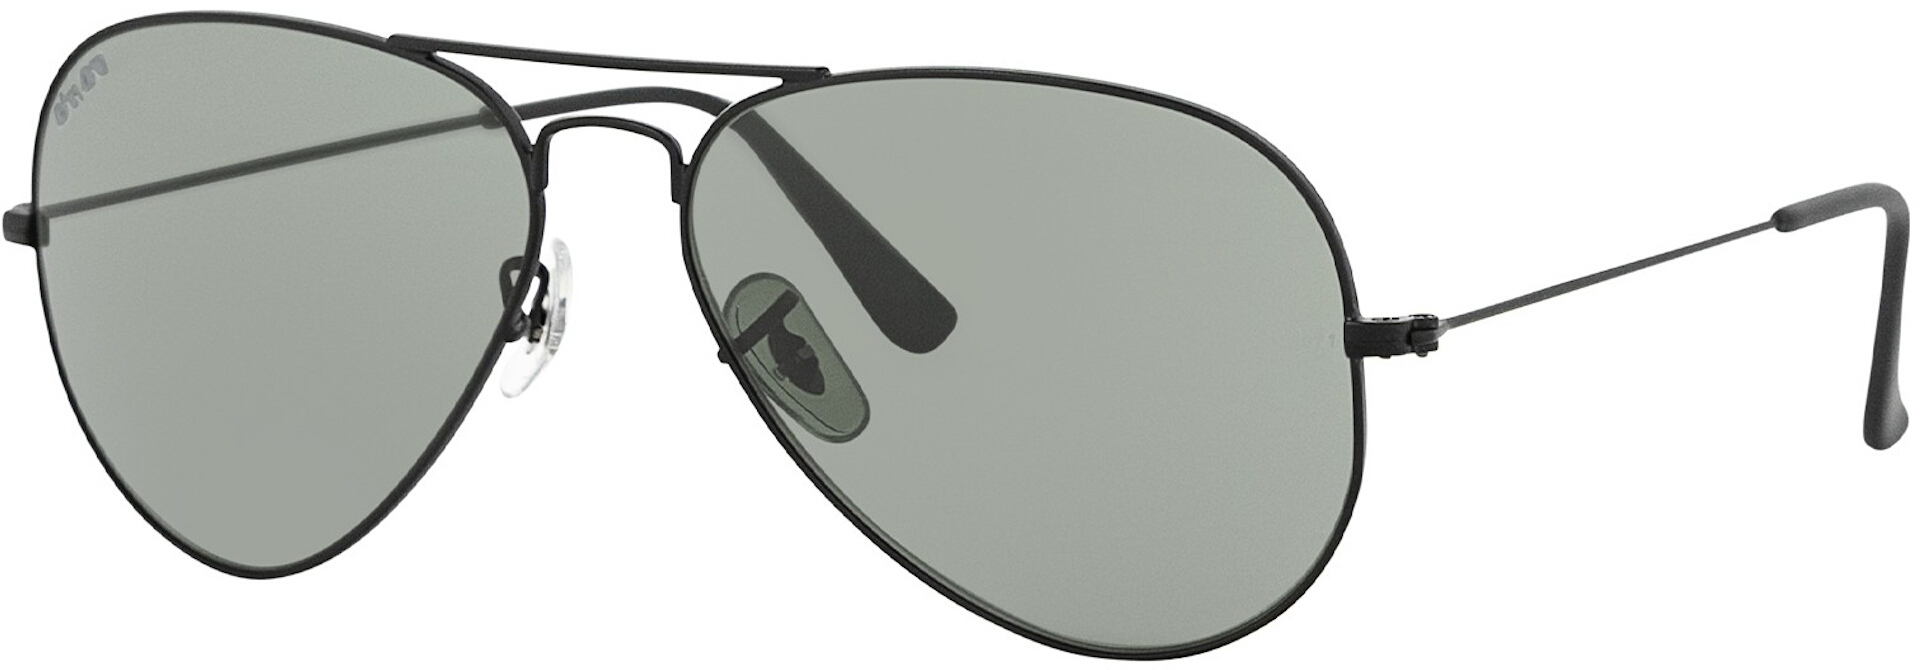 John Doe Aviator Sunglasses, black, black, Size One Size